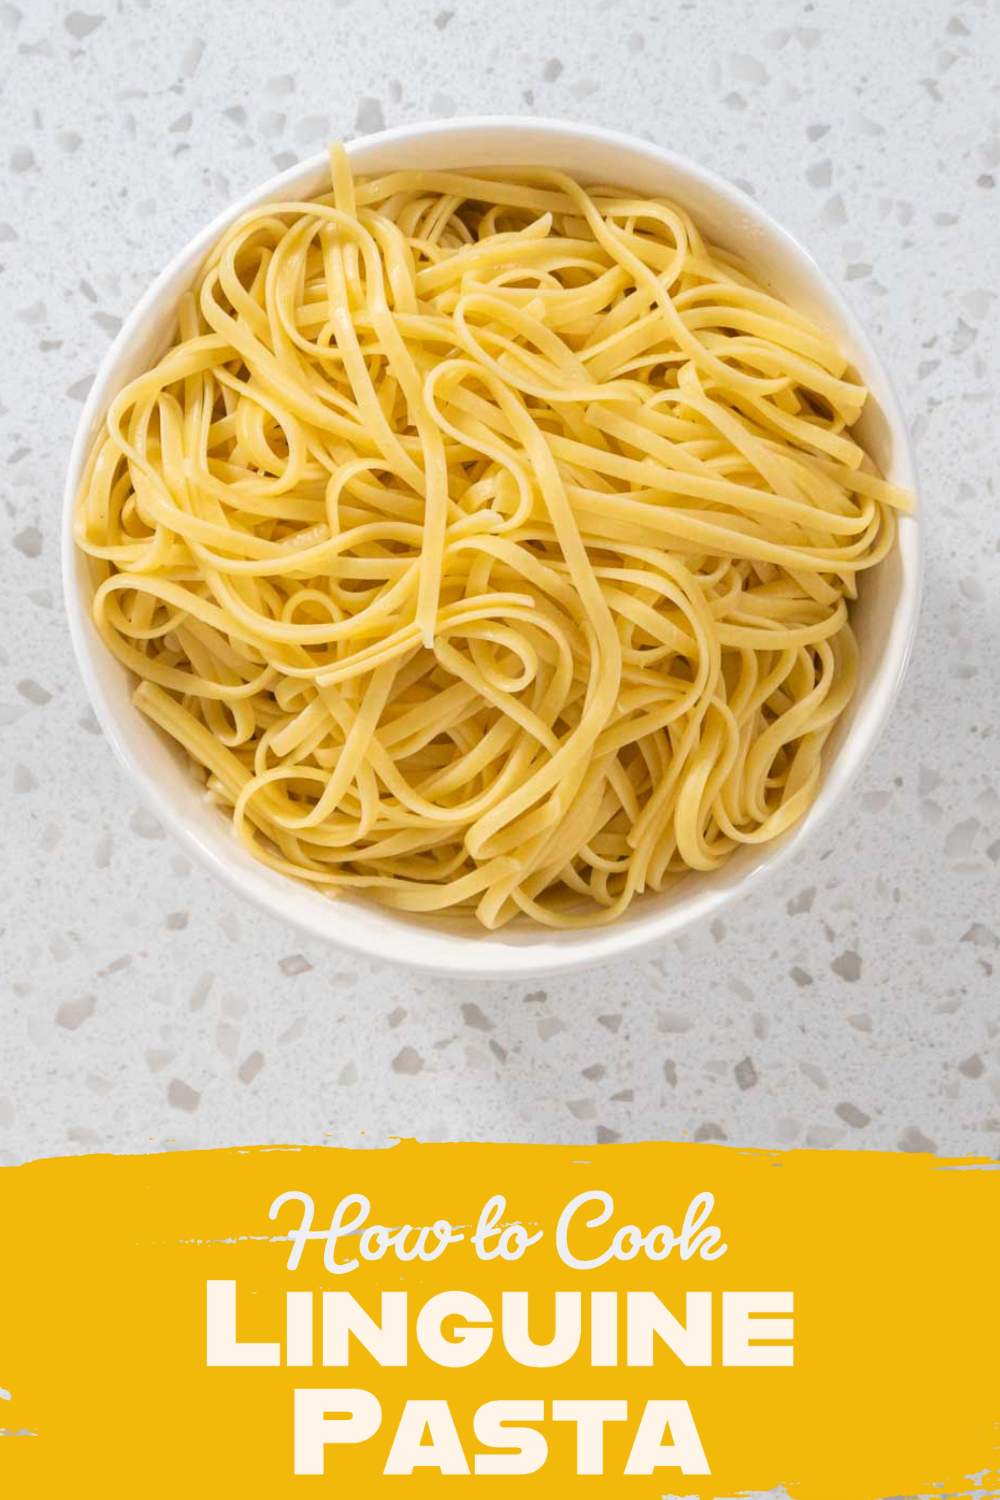 How to Cook Linguine Pasta